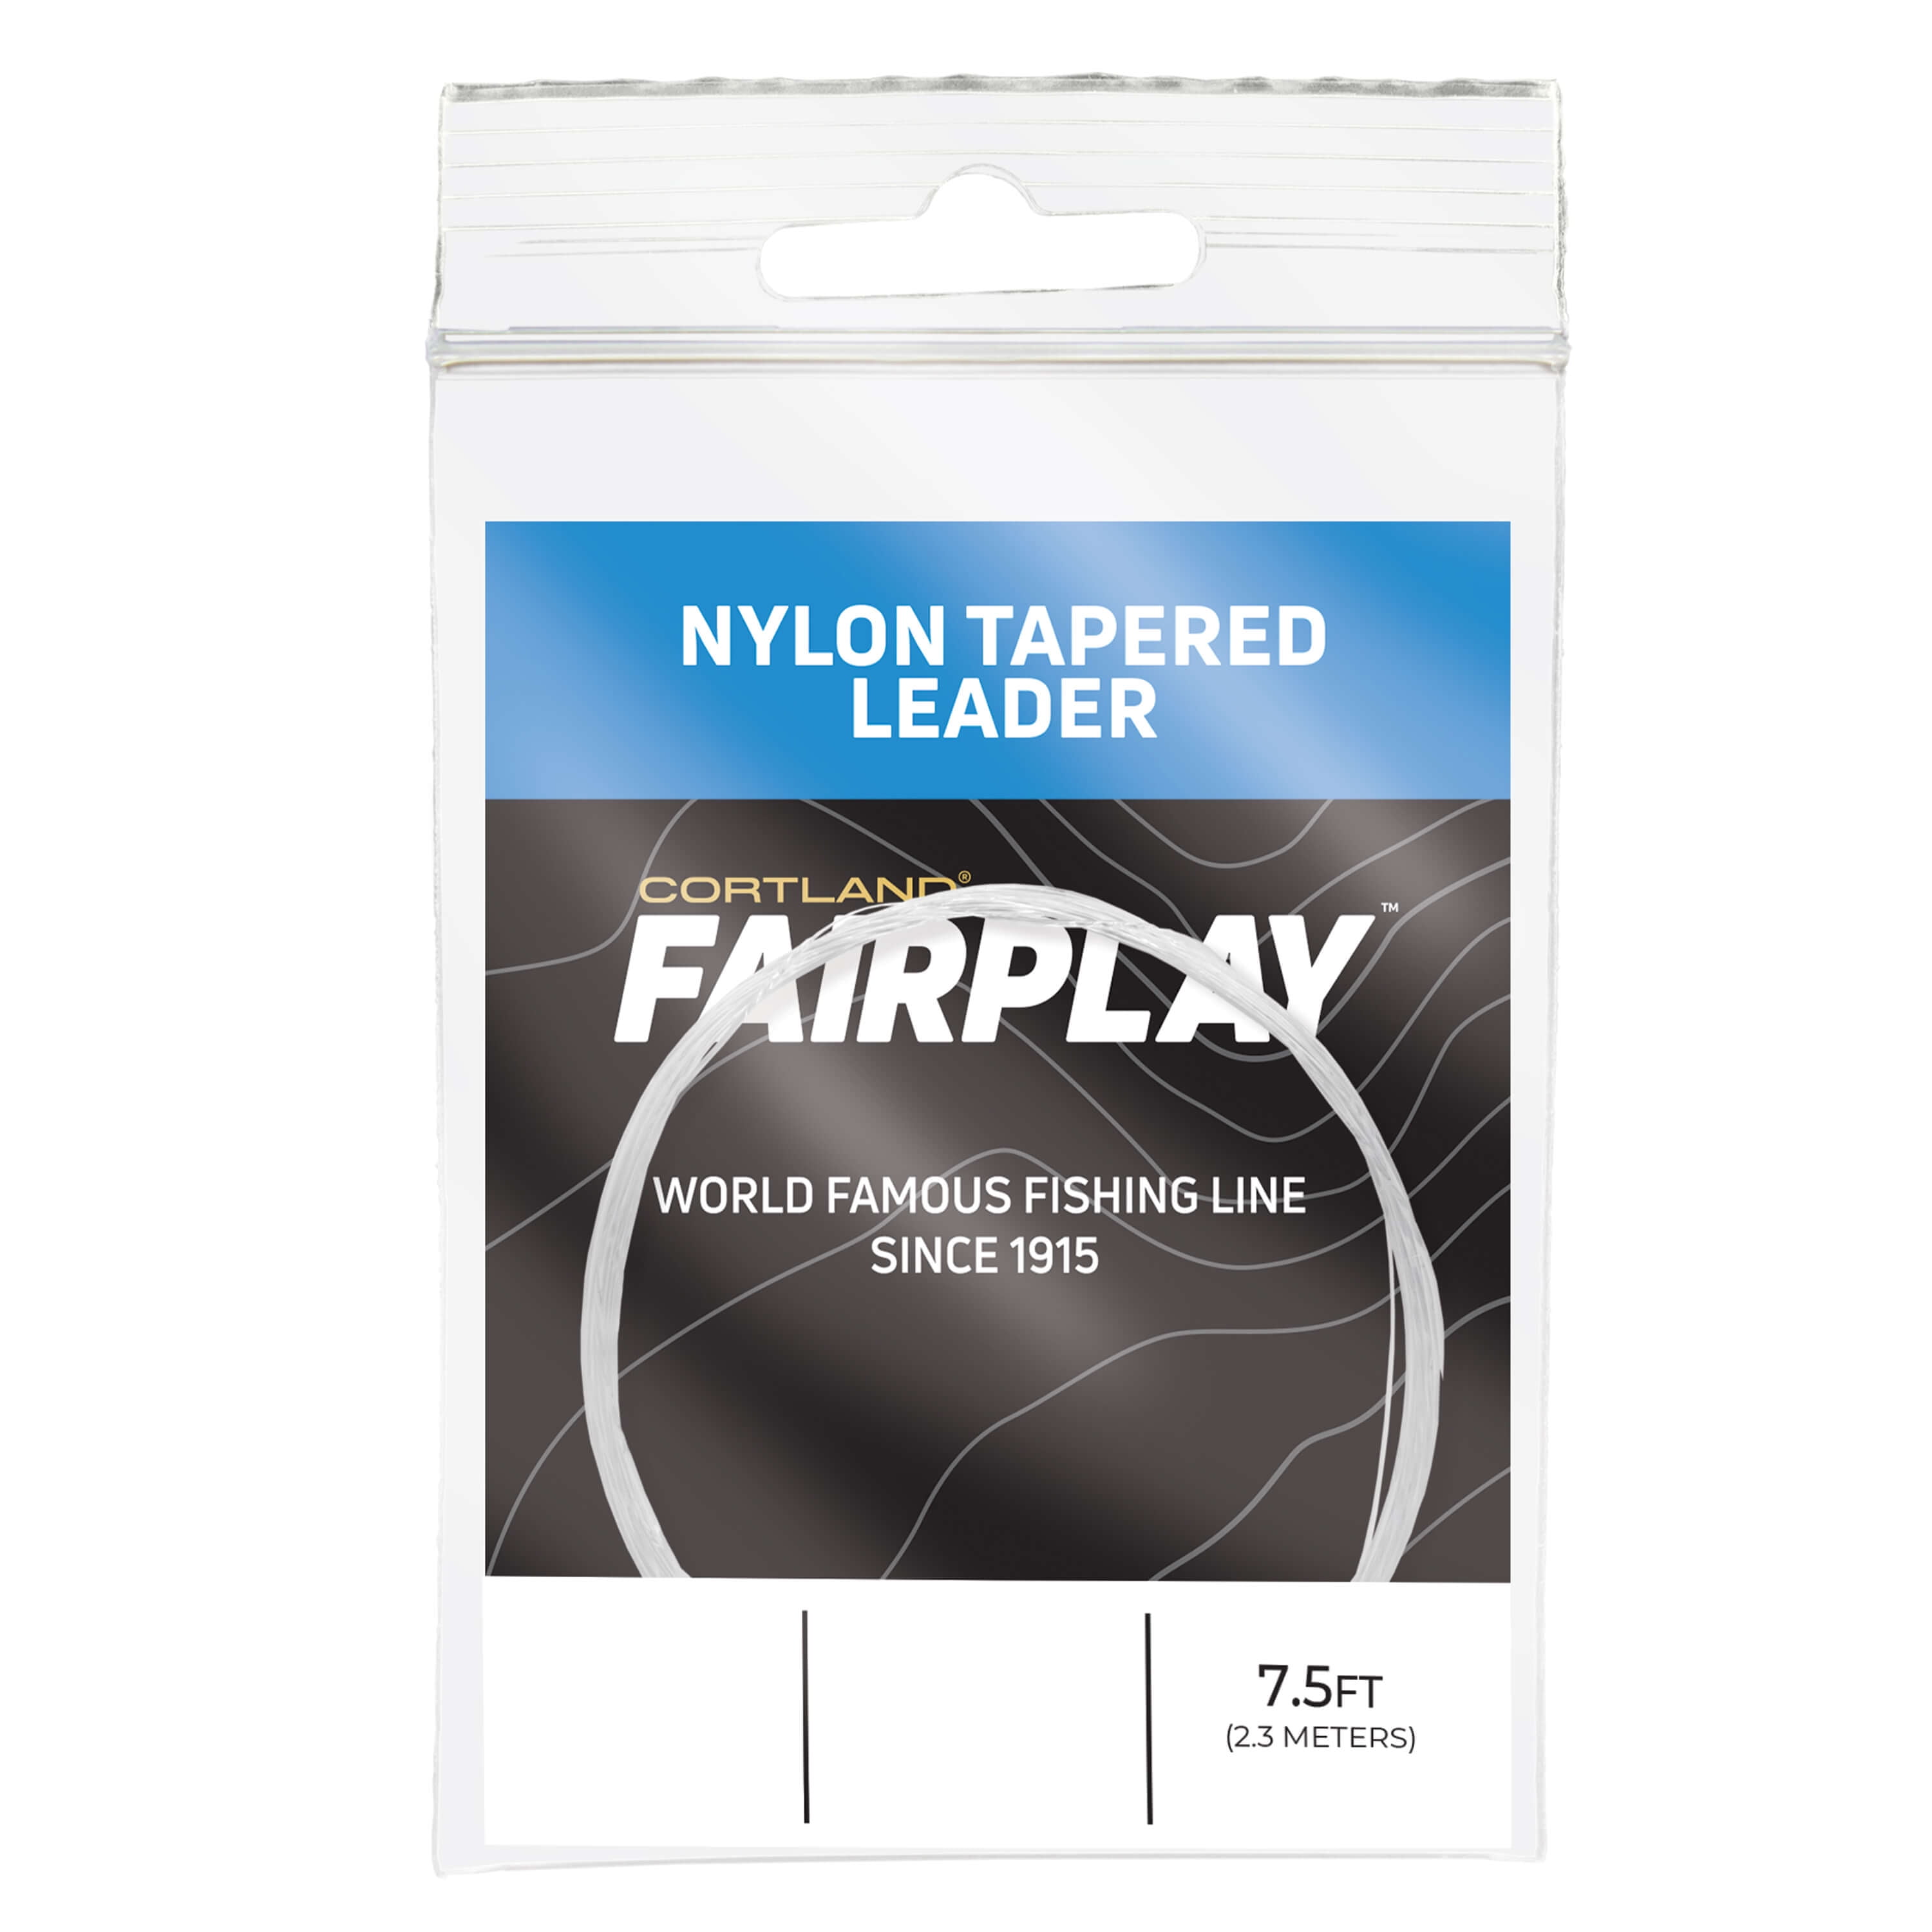 Cortland Fairplay 7.5' Nylon Monofilament Tapered Fly Fishing Leader, 6X,  2.7lb test, No Loop, 605077 